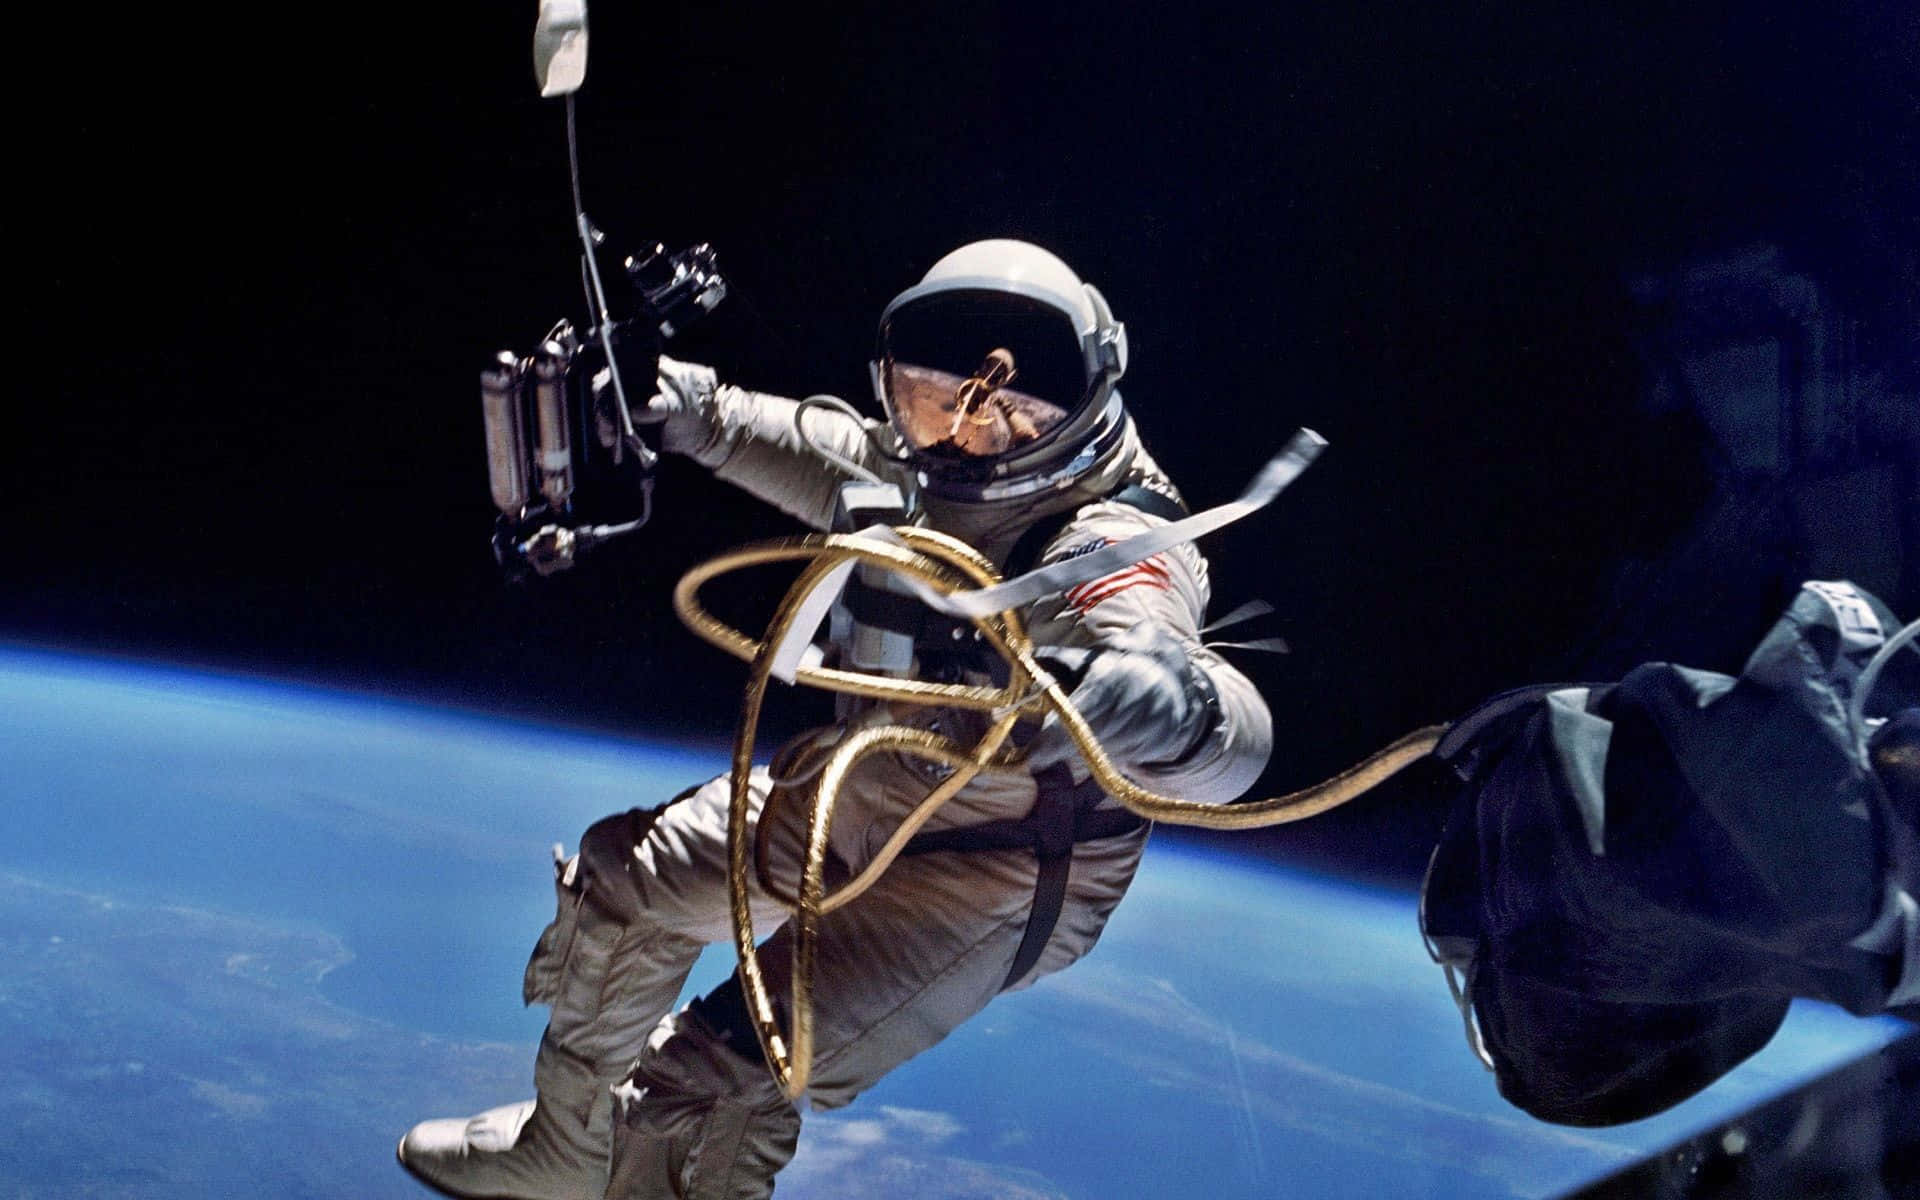 Udforsk universet med en trippet astronaut i rummet. Wallpaper